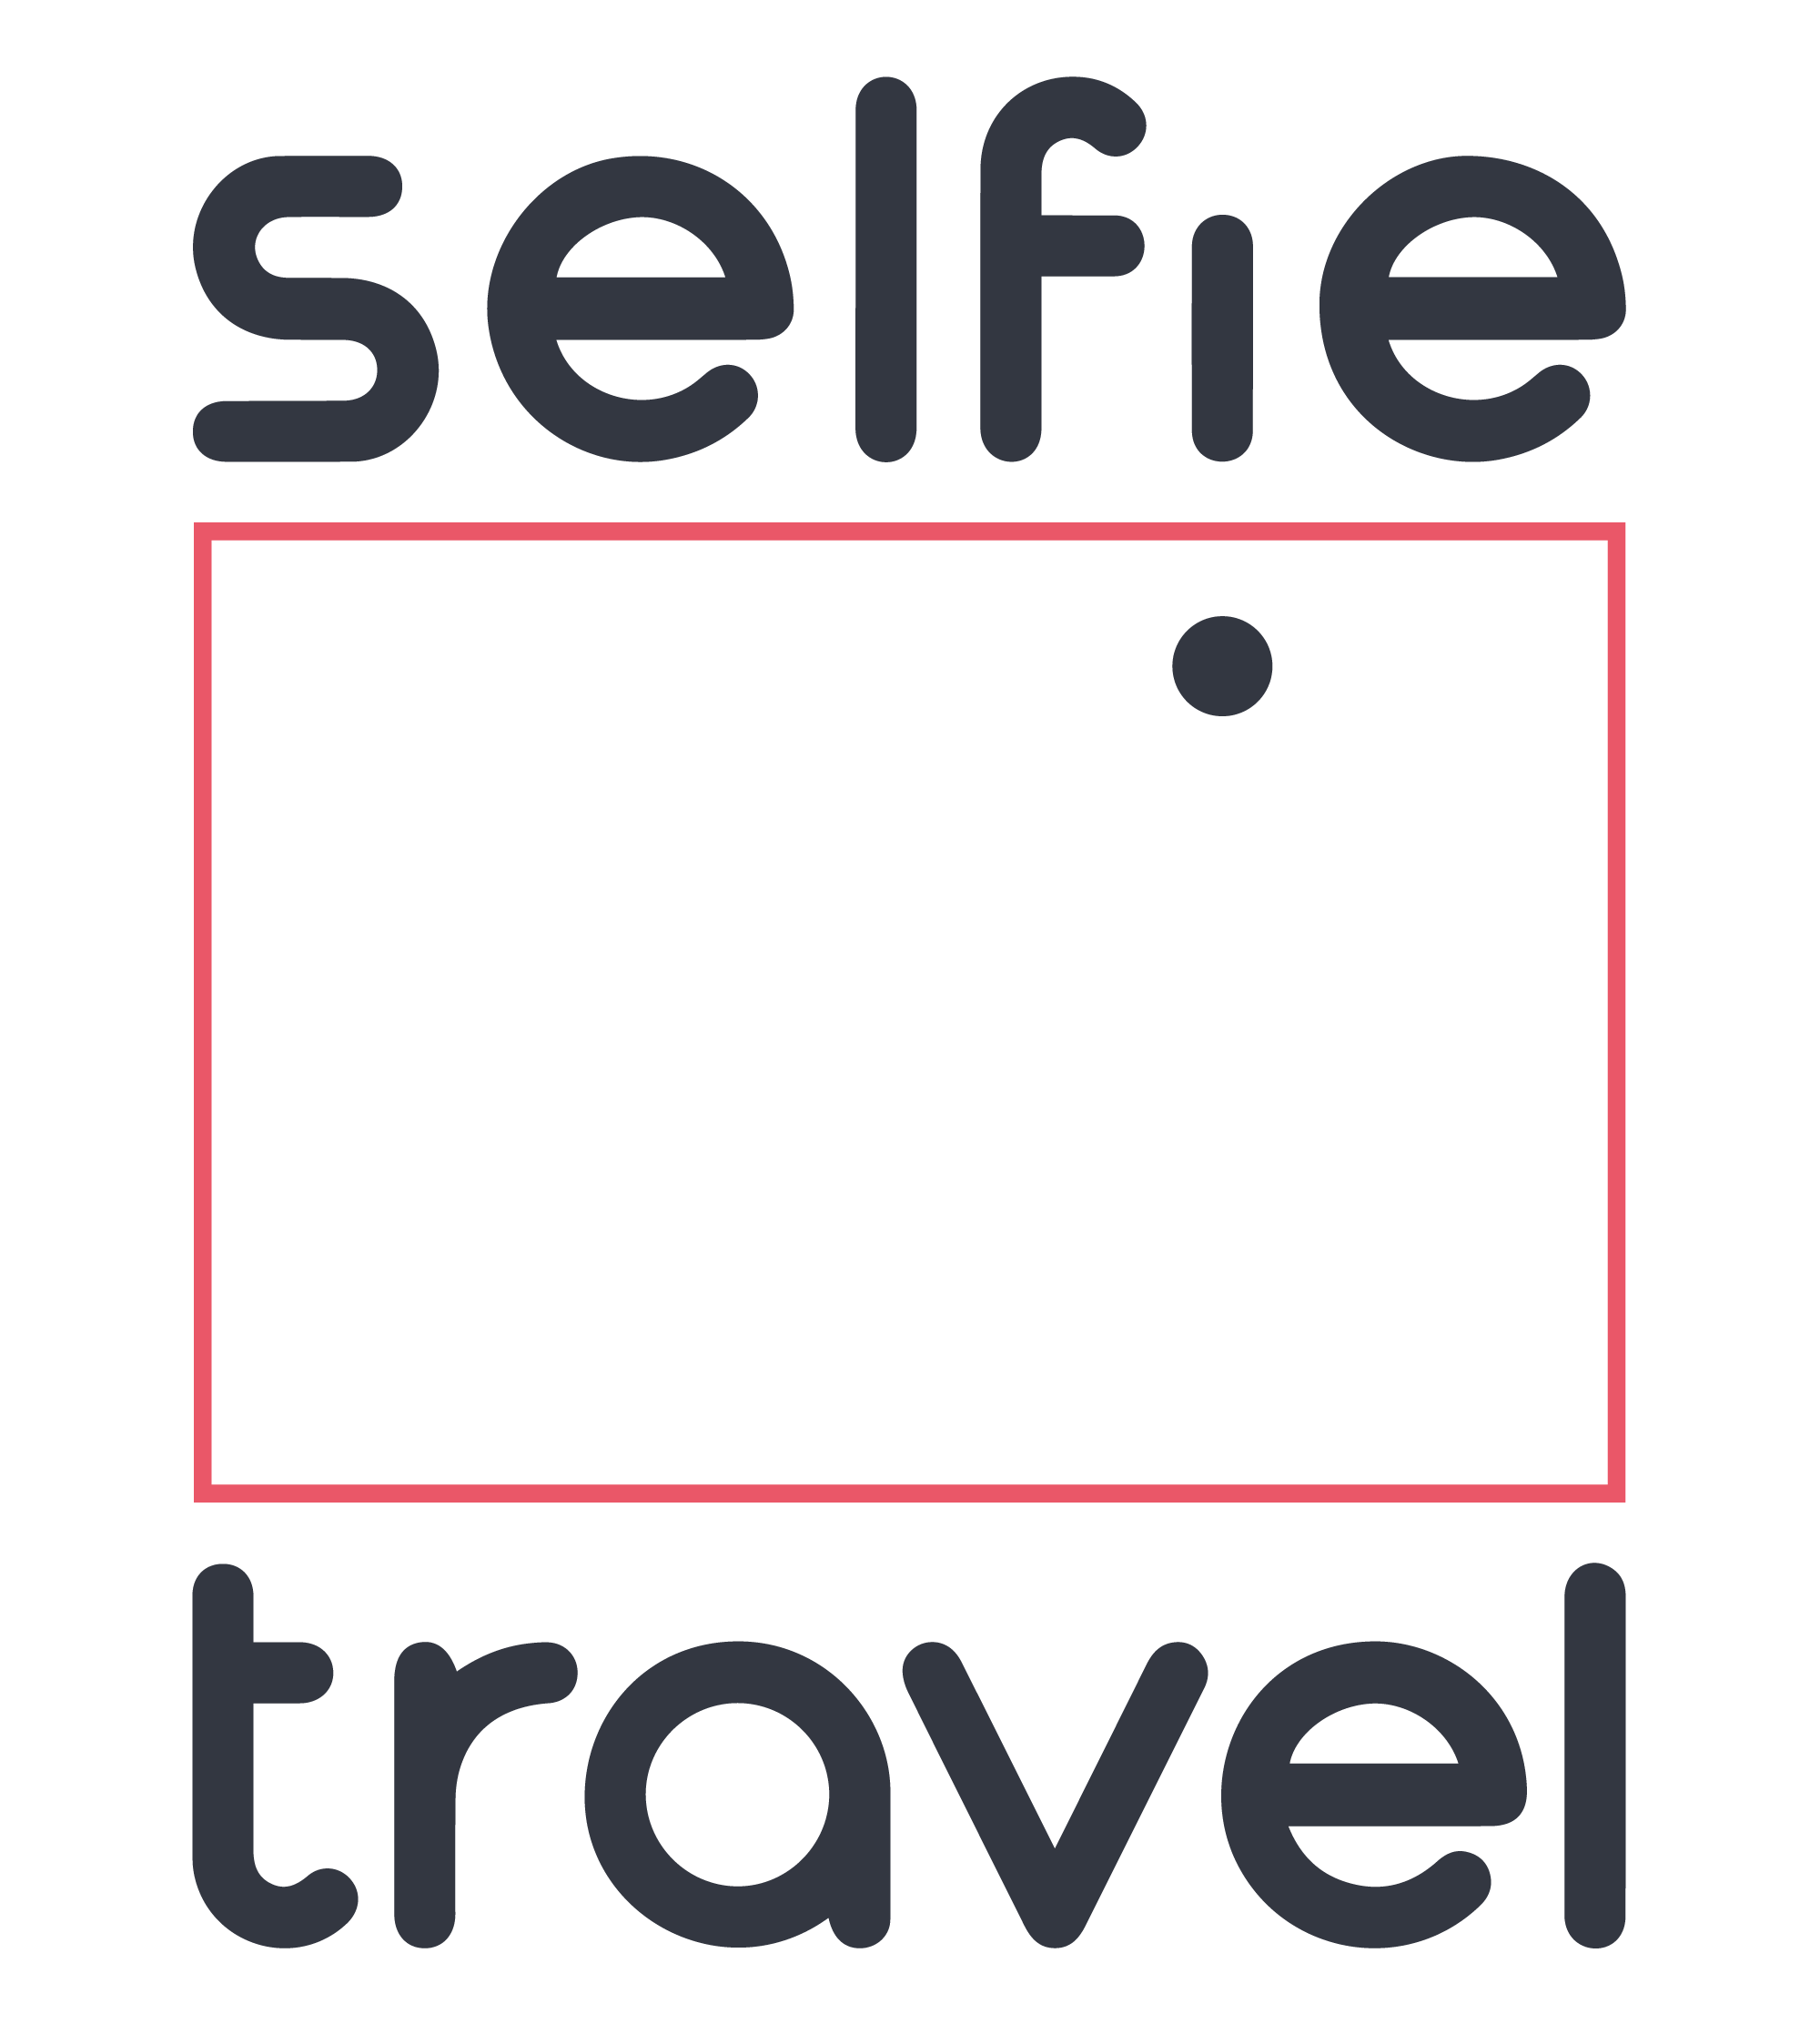 Selfie Travel